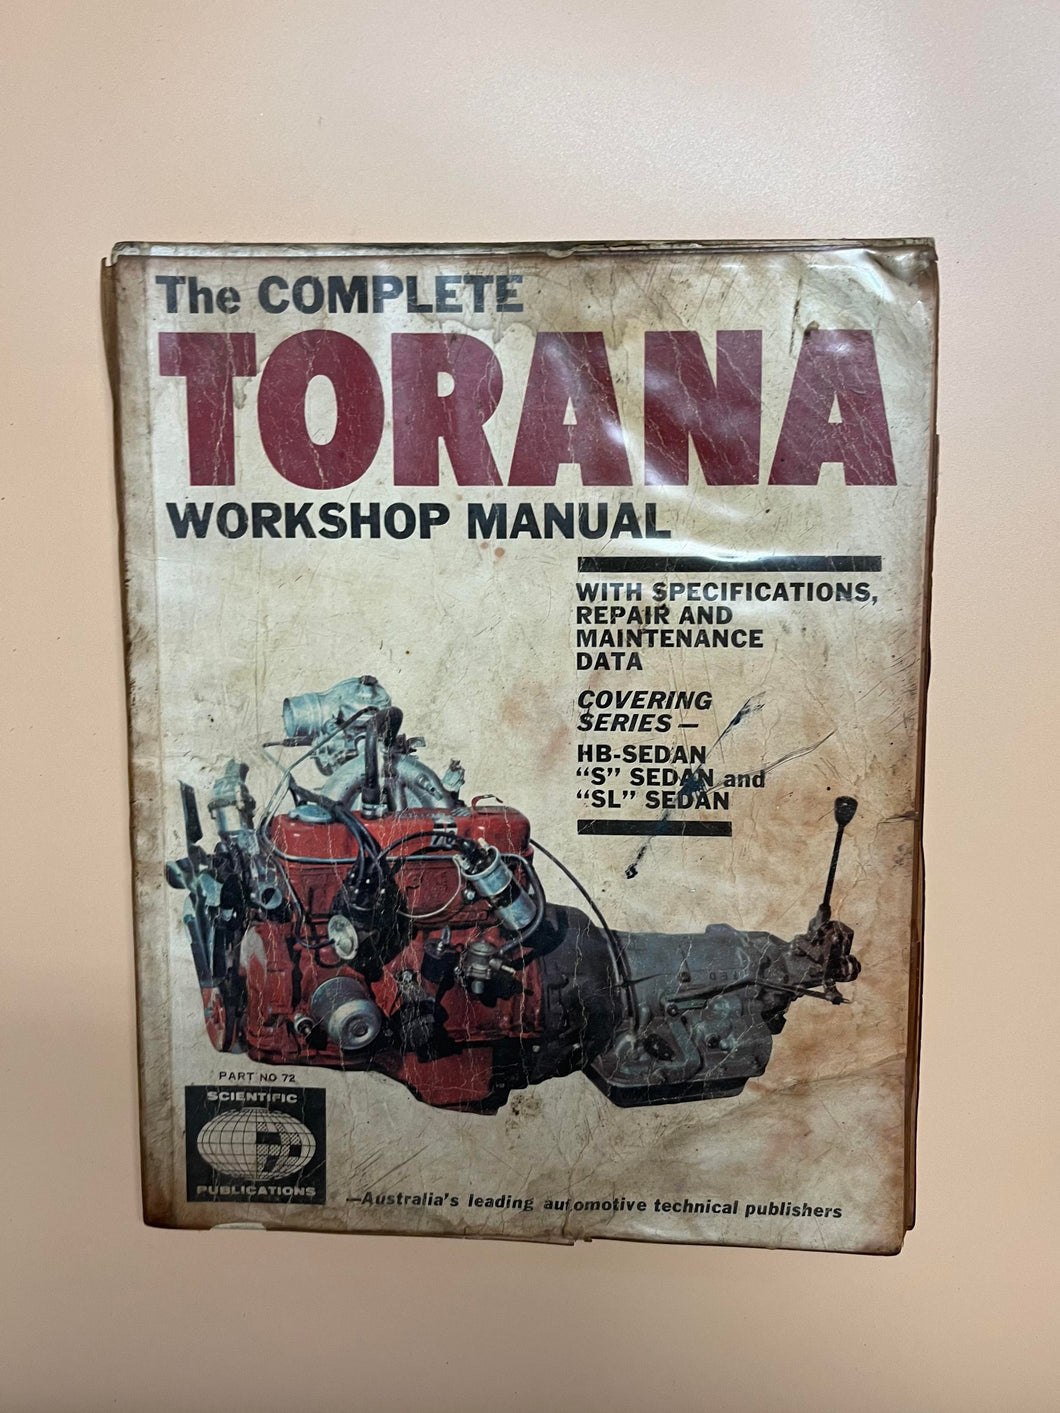 The Complete Torana Workshop Manual